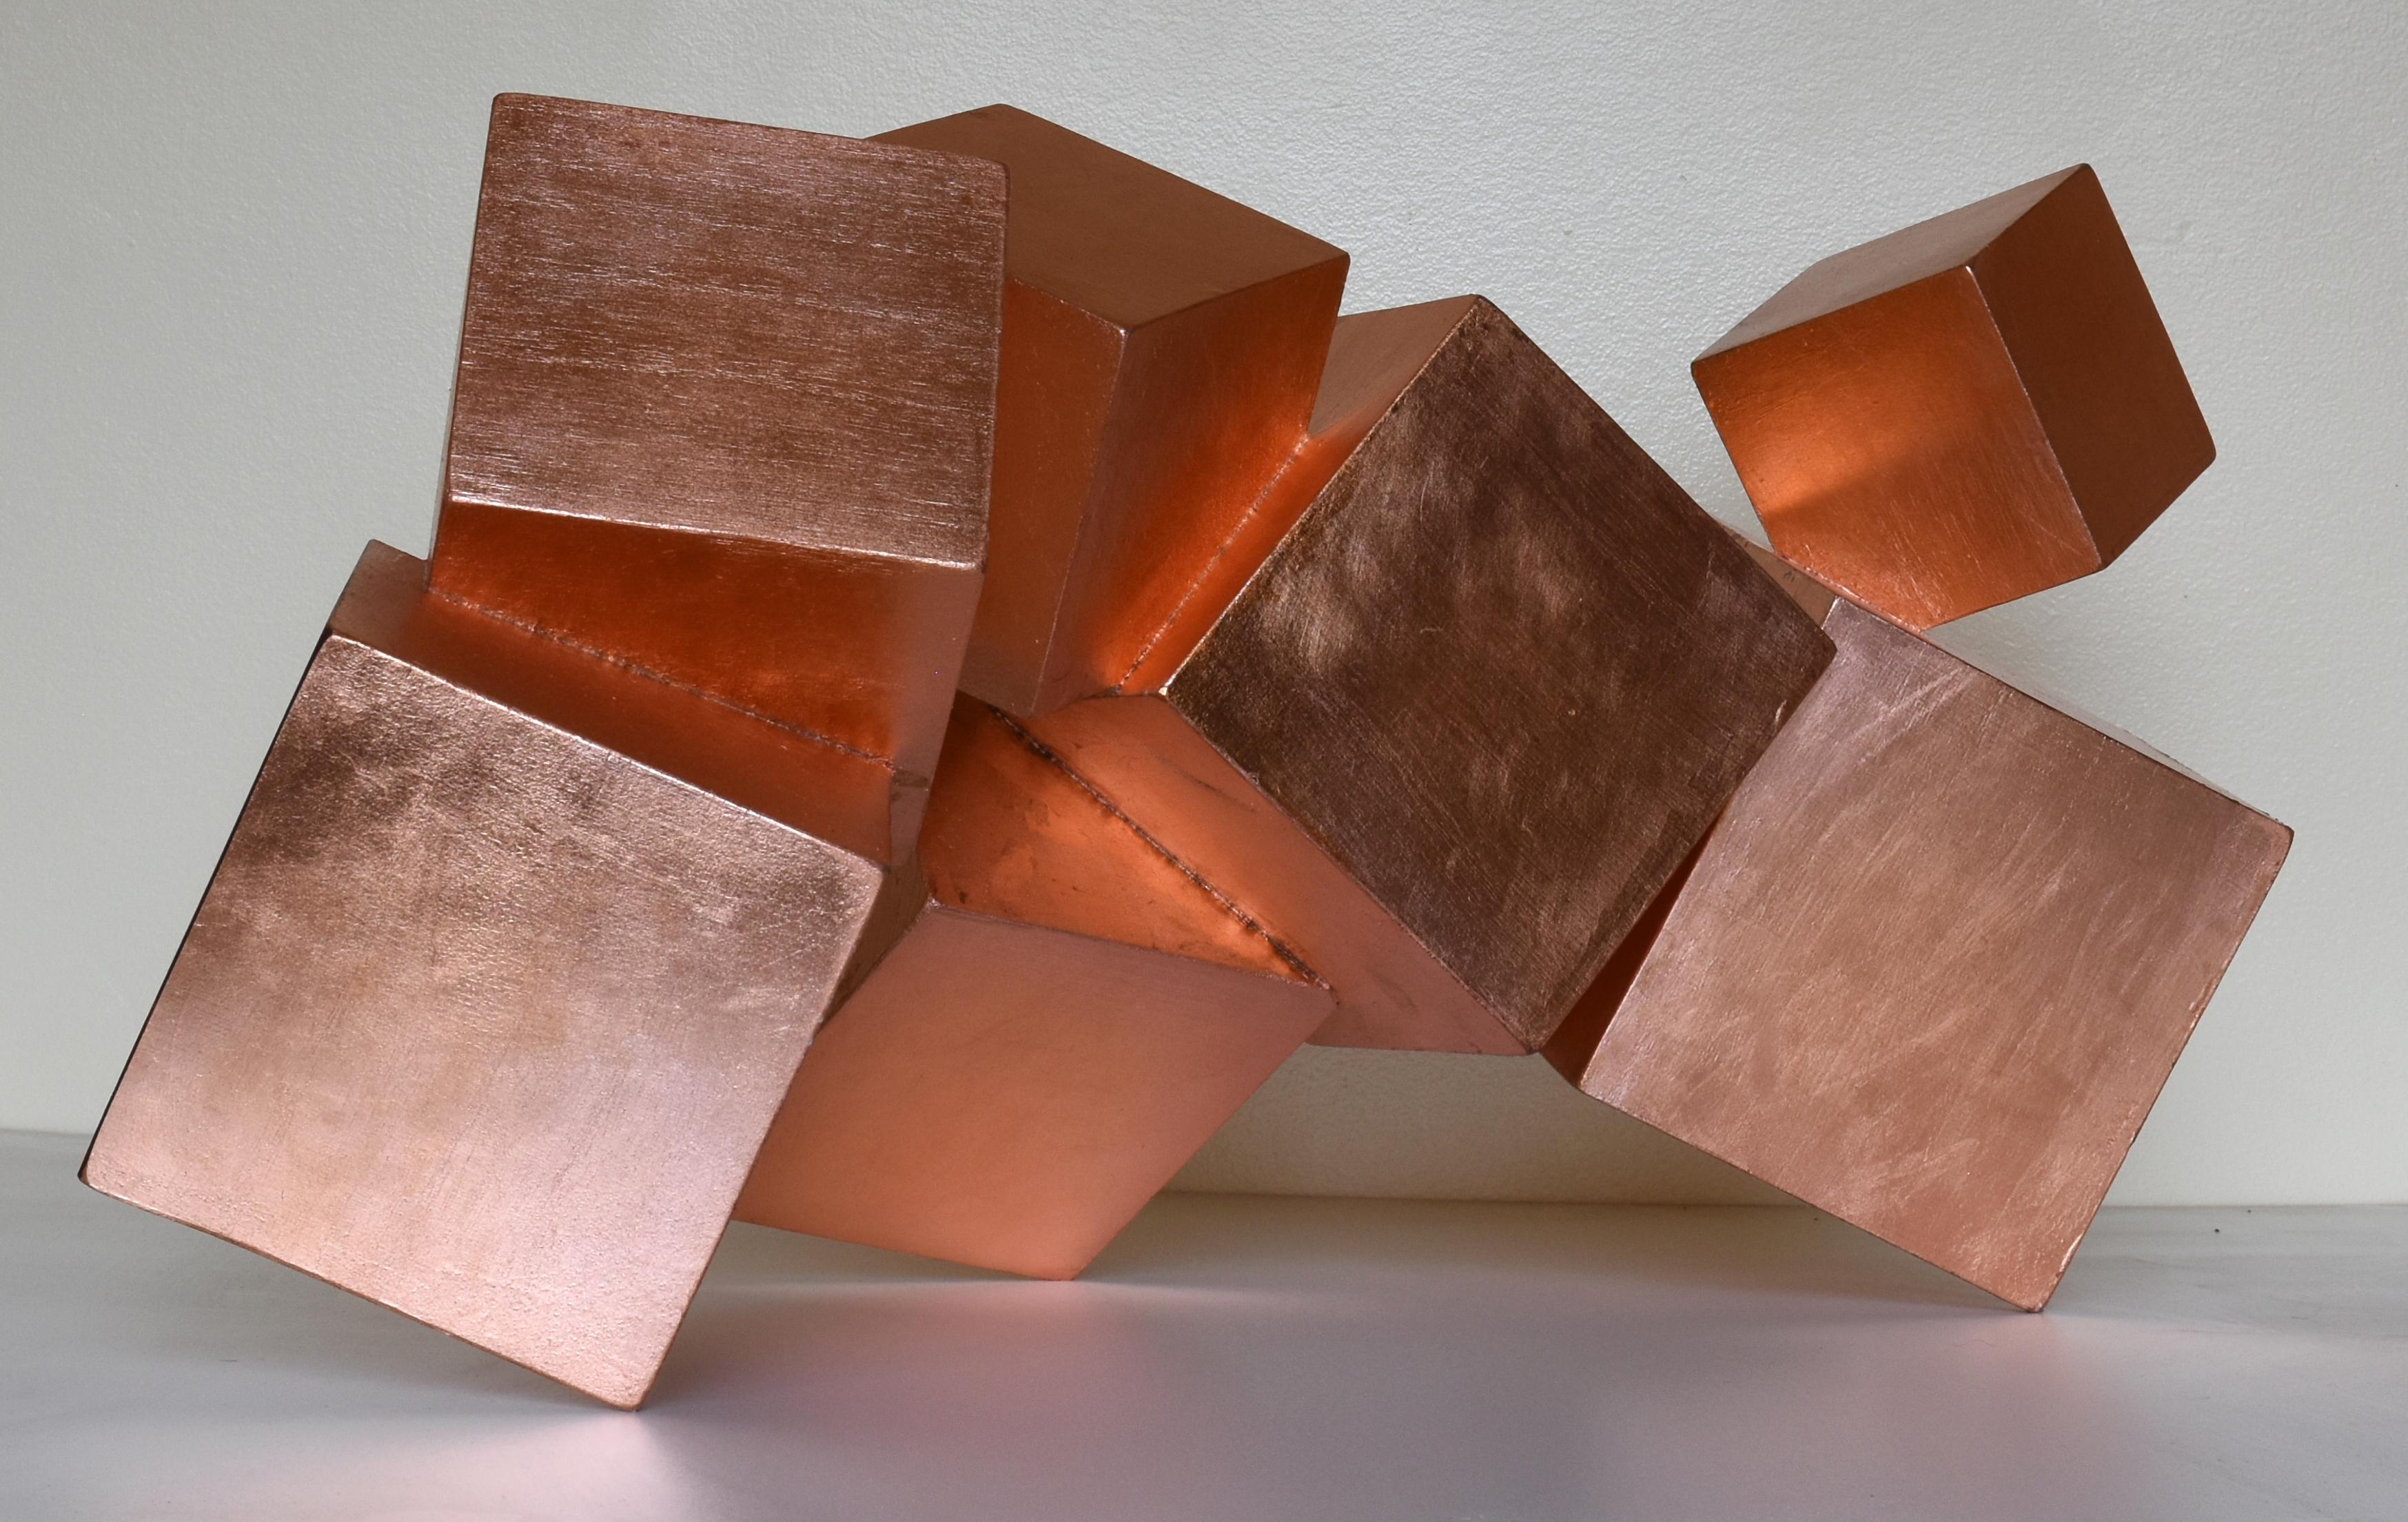 Copper and Mahogany Pyrite (exotic wood, metallic, cubic, table top sculpture) 12